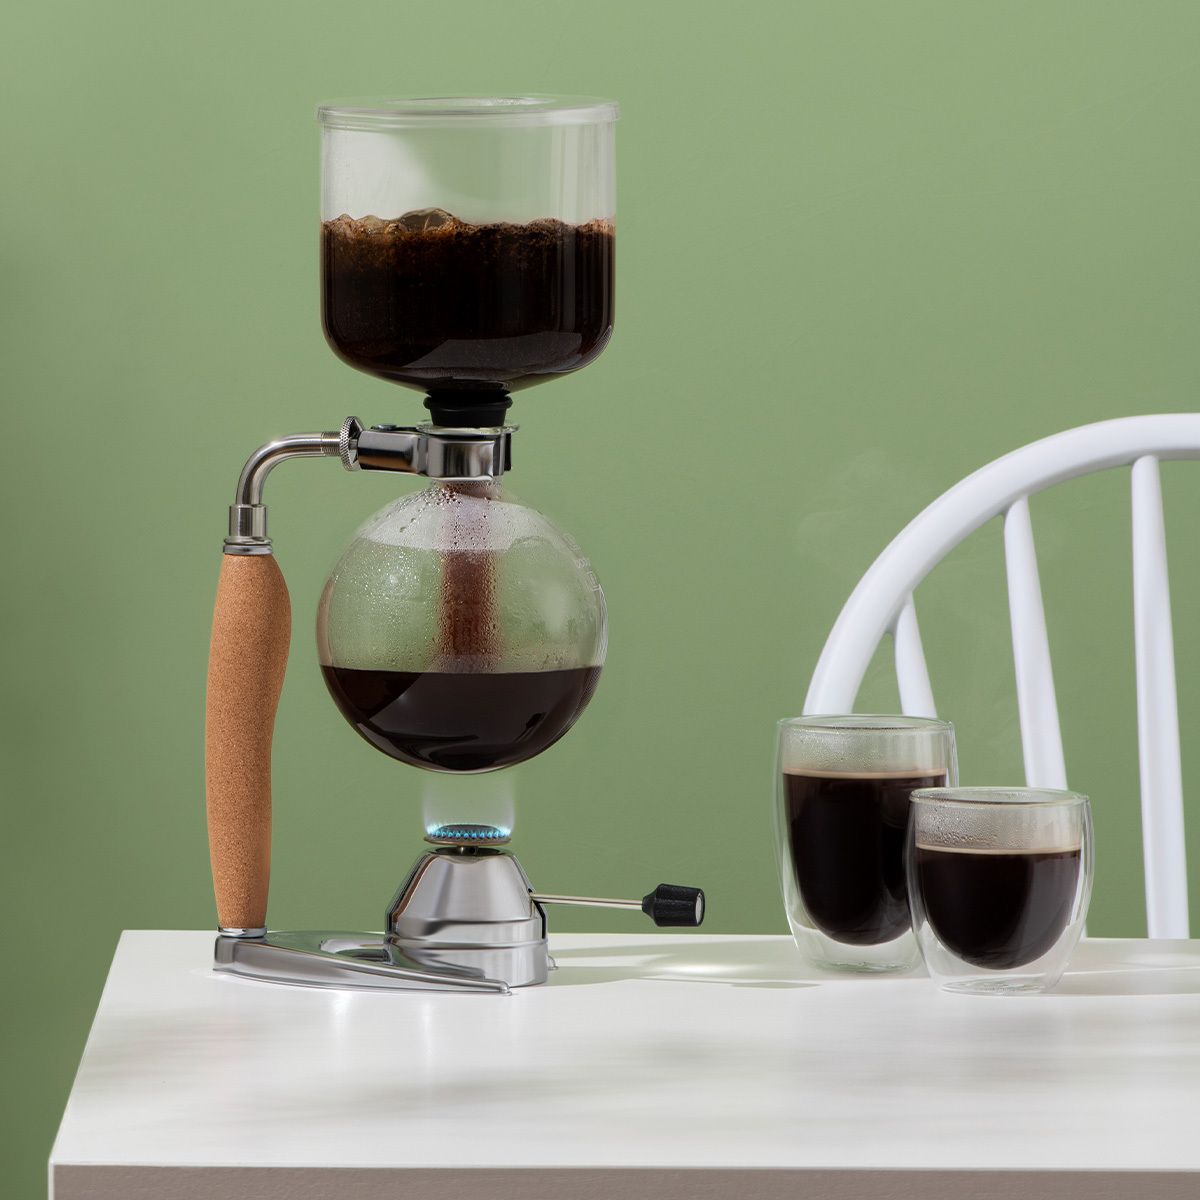 Bodum Mocha Vacuum Coffee Maker With Gas Burner, 8 Cups